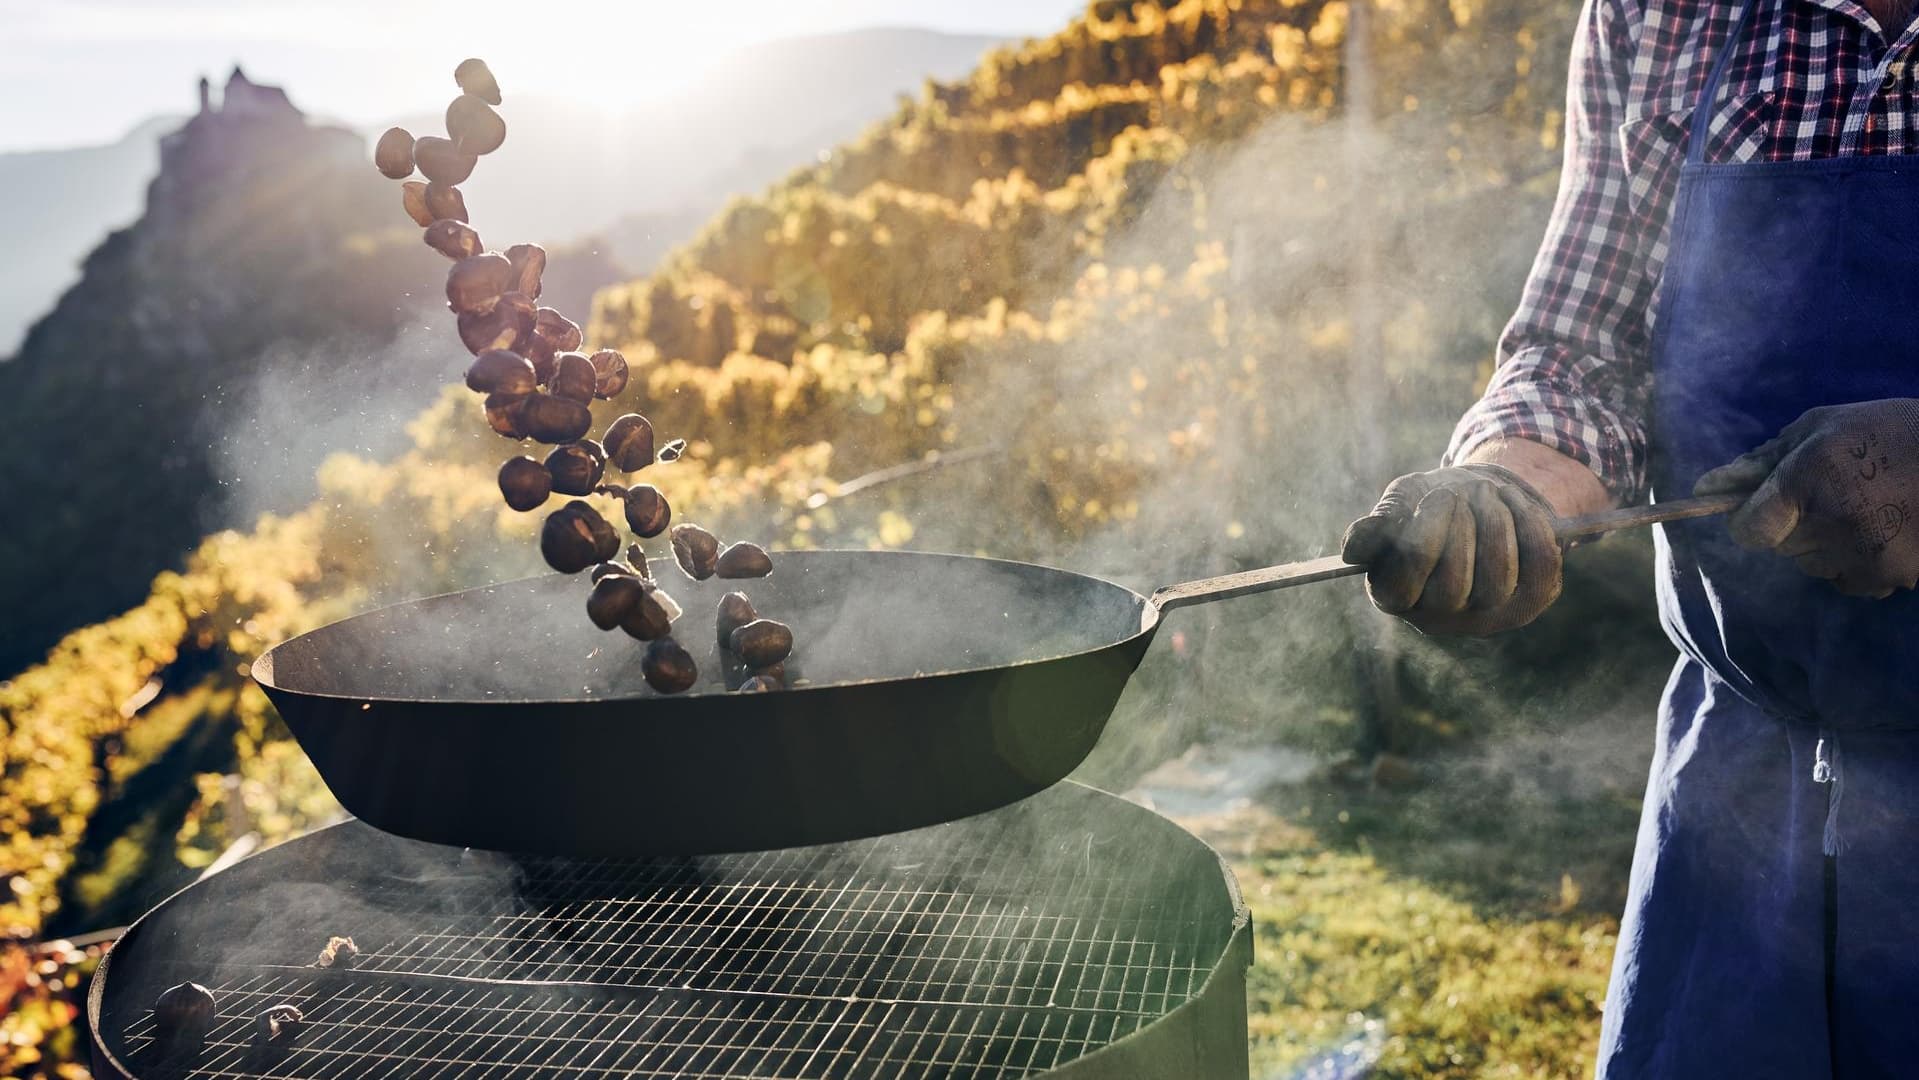 Kastanien braten im Weingarten ©IDM Südtirol-Alto Adige/Manuel Ferrigato